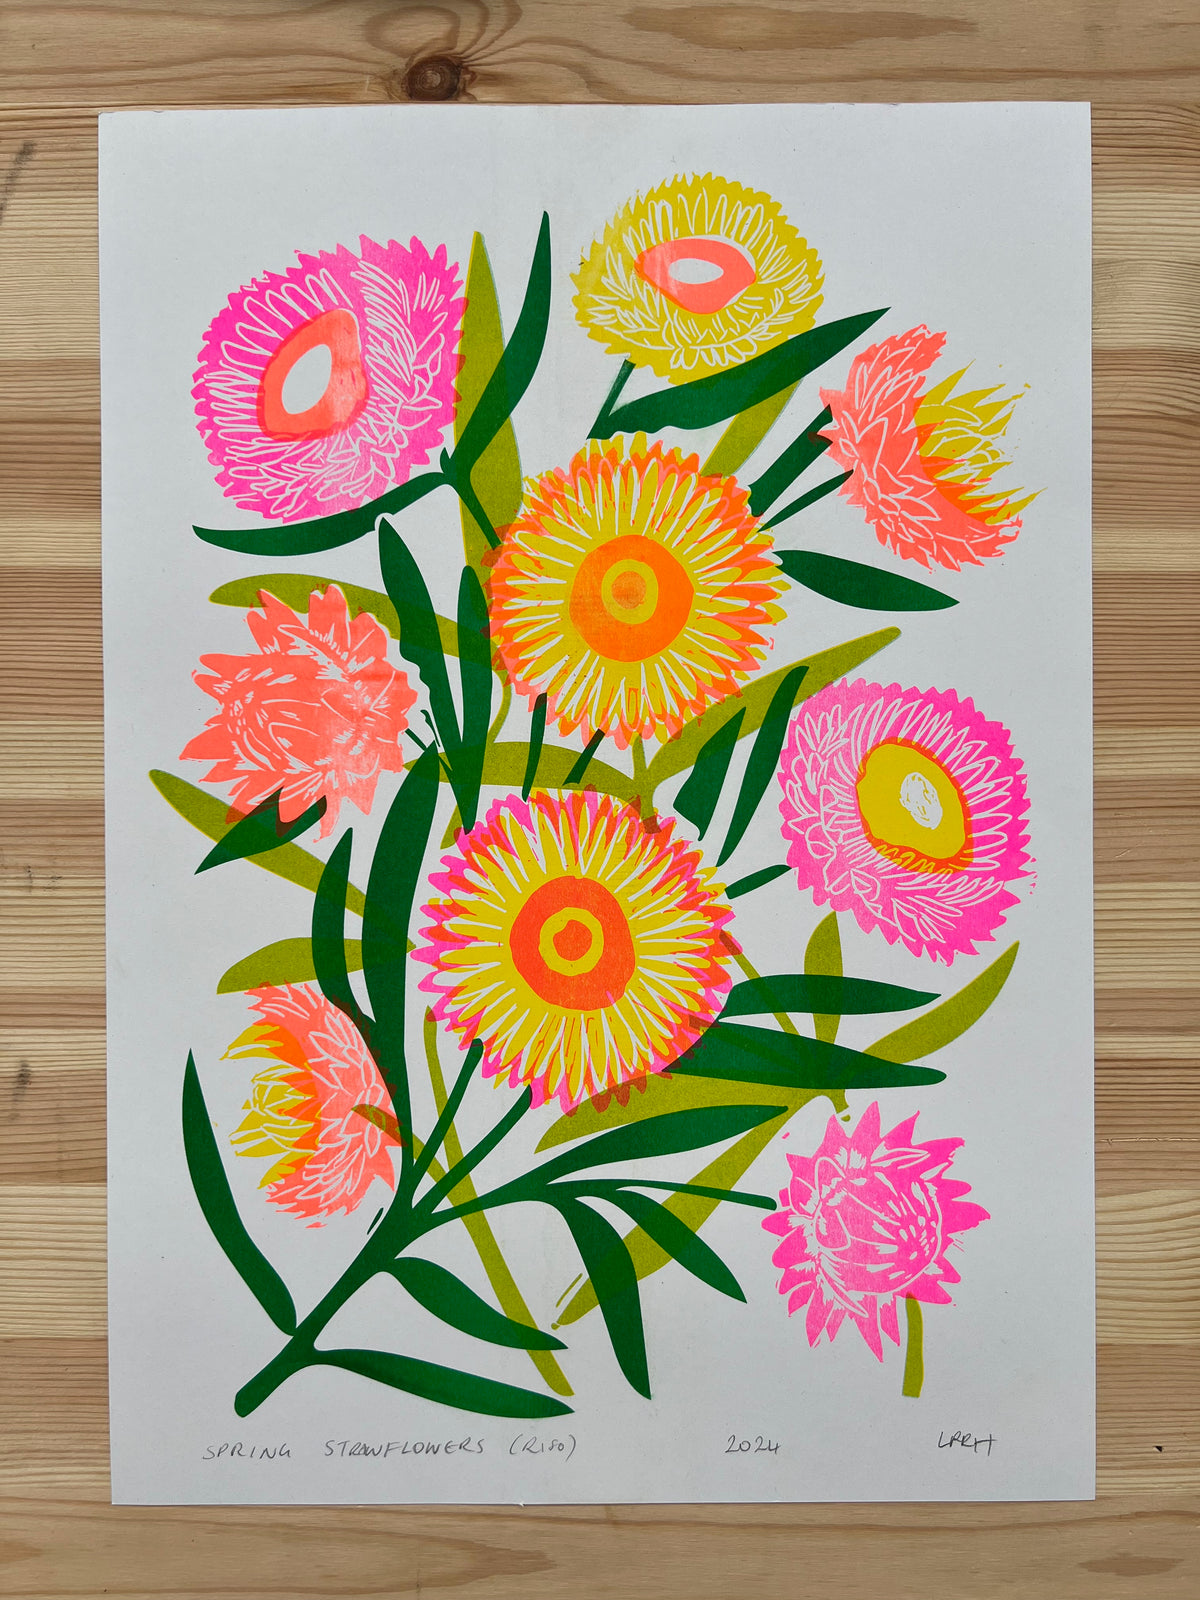 Spring Strawflowers (Riso) - A3 Risoprint